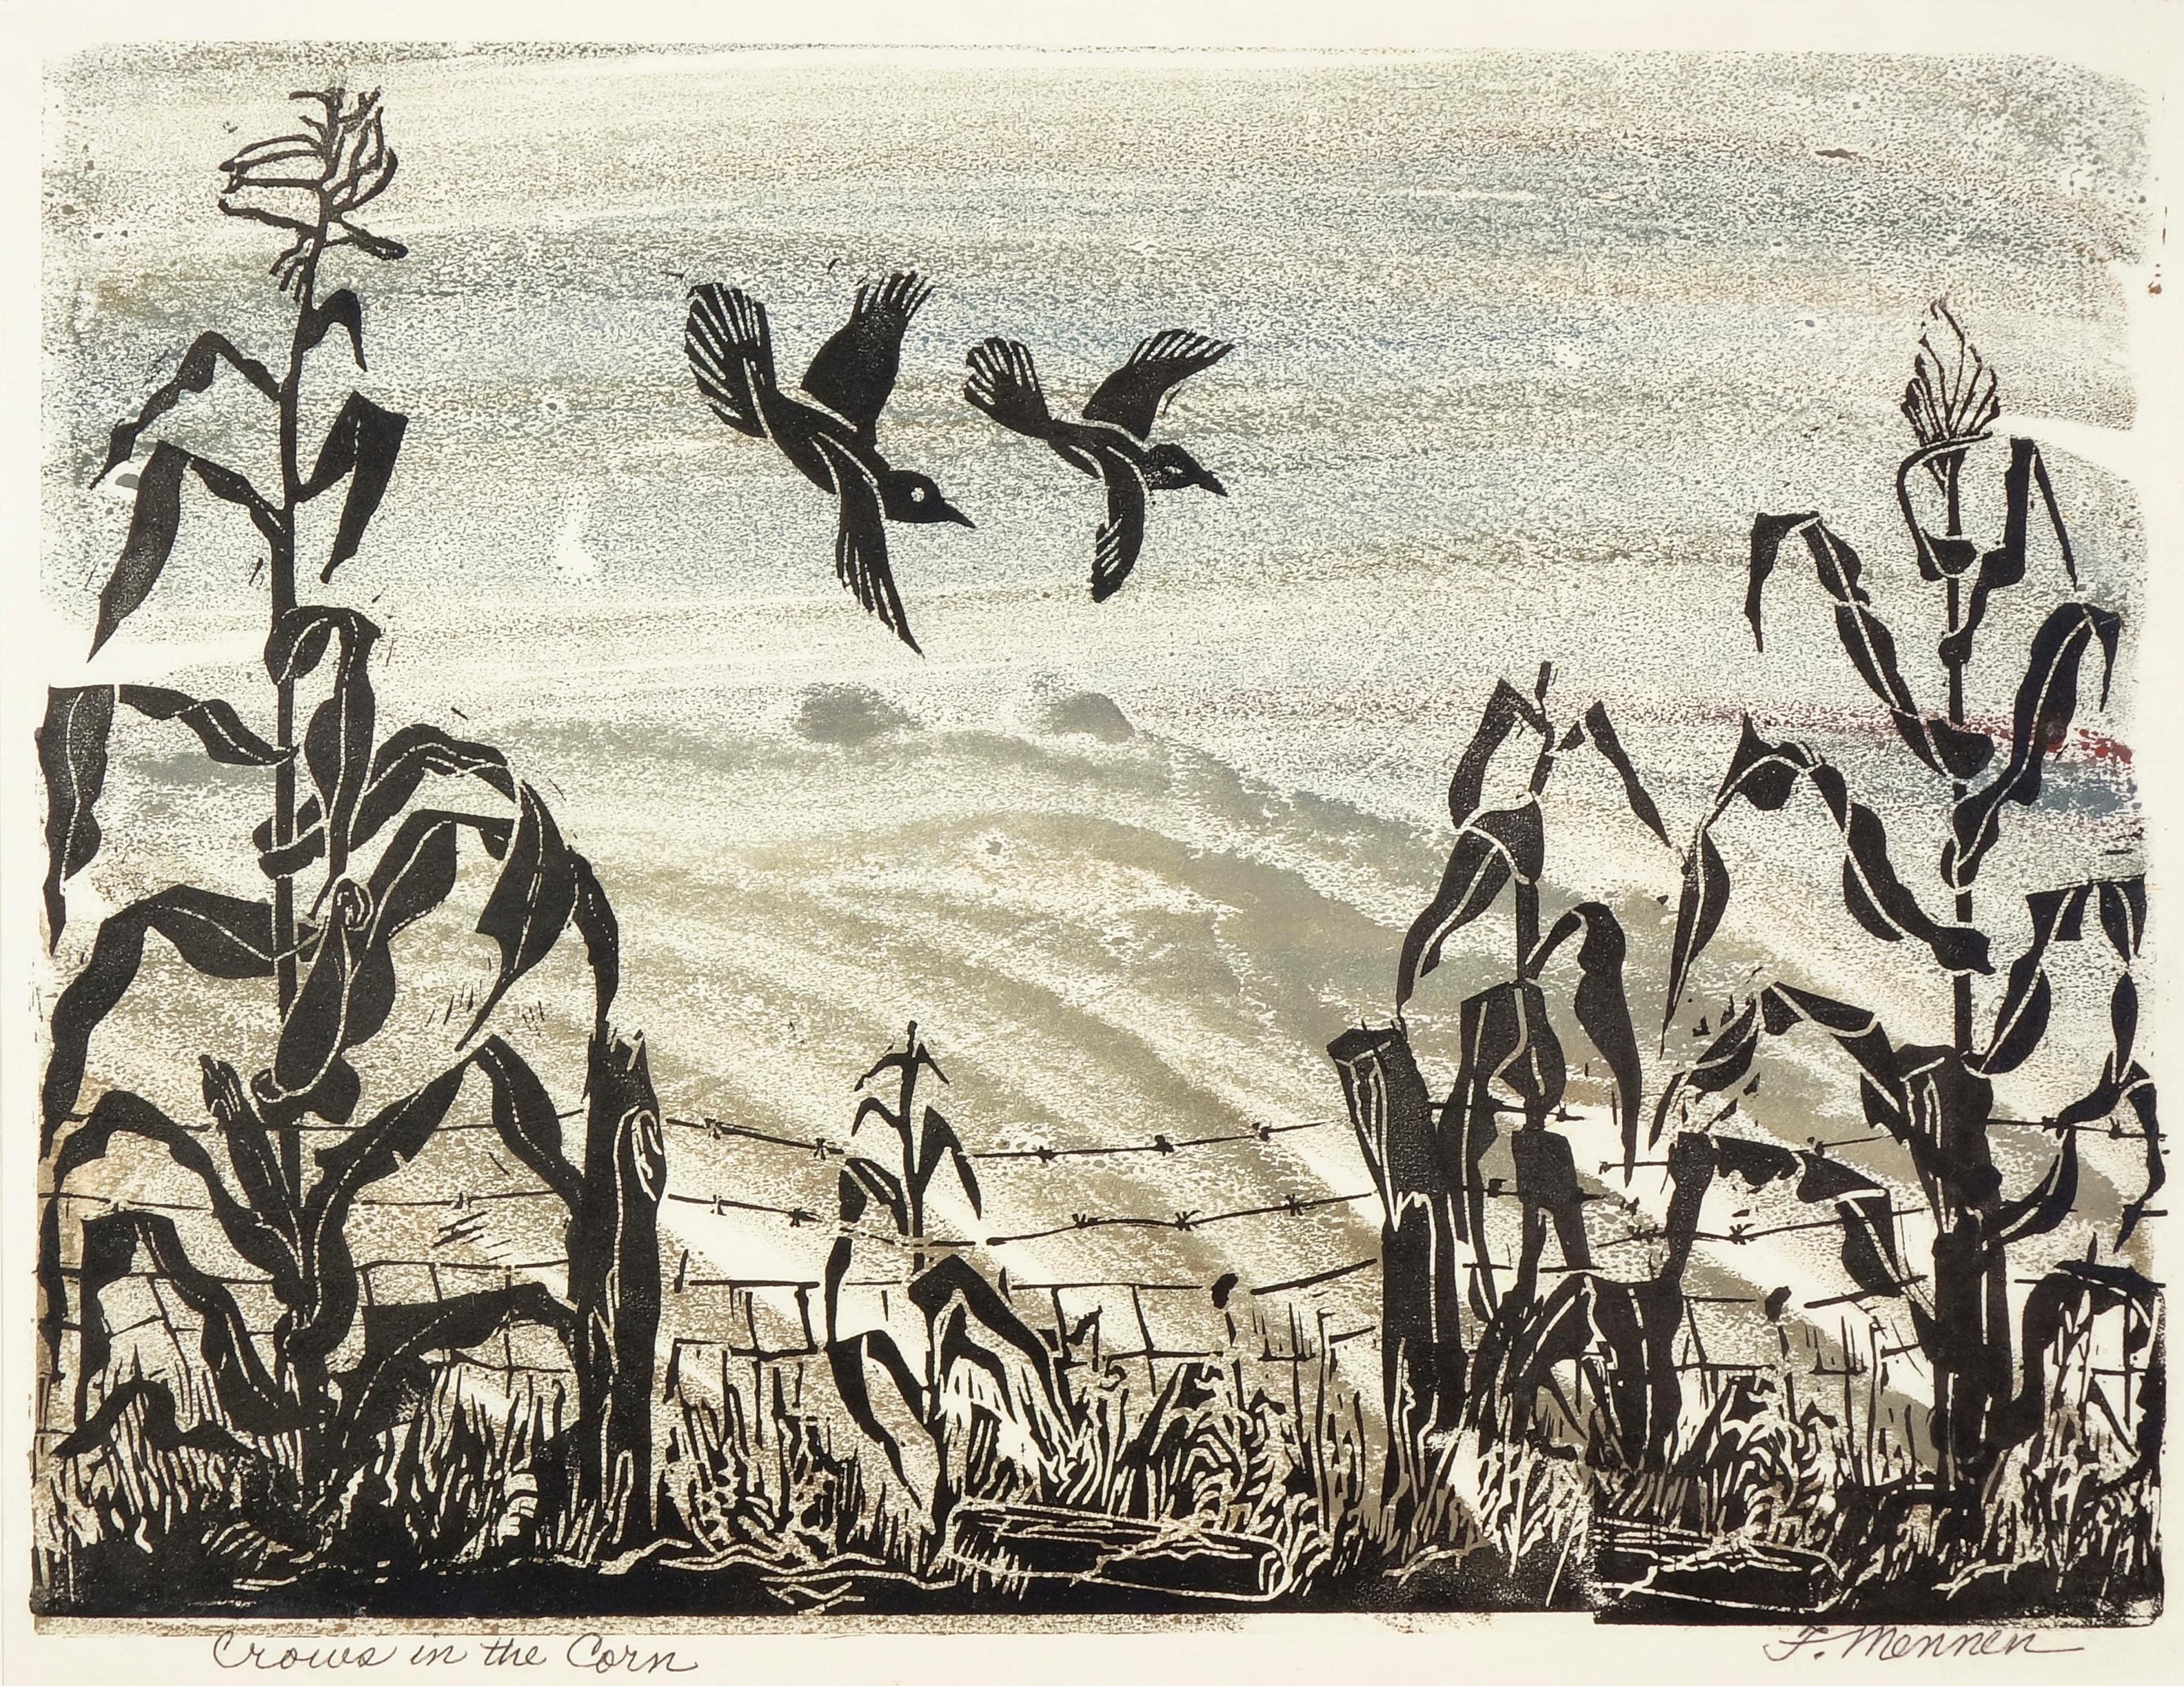 Crows in Corn - Print by Fannie Mennen